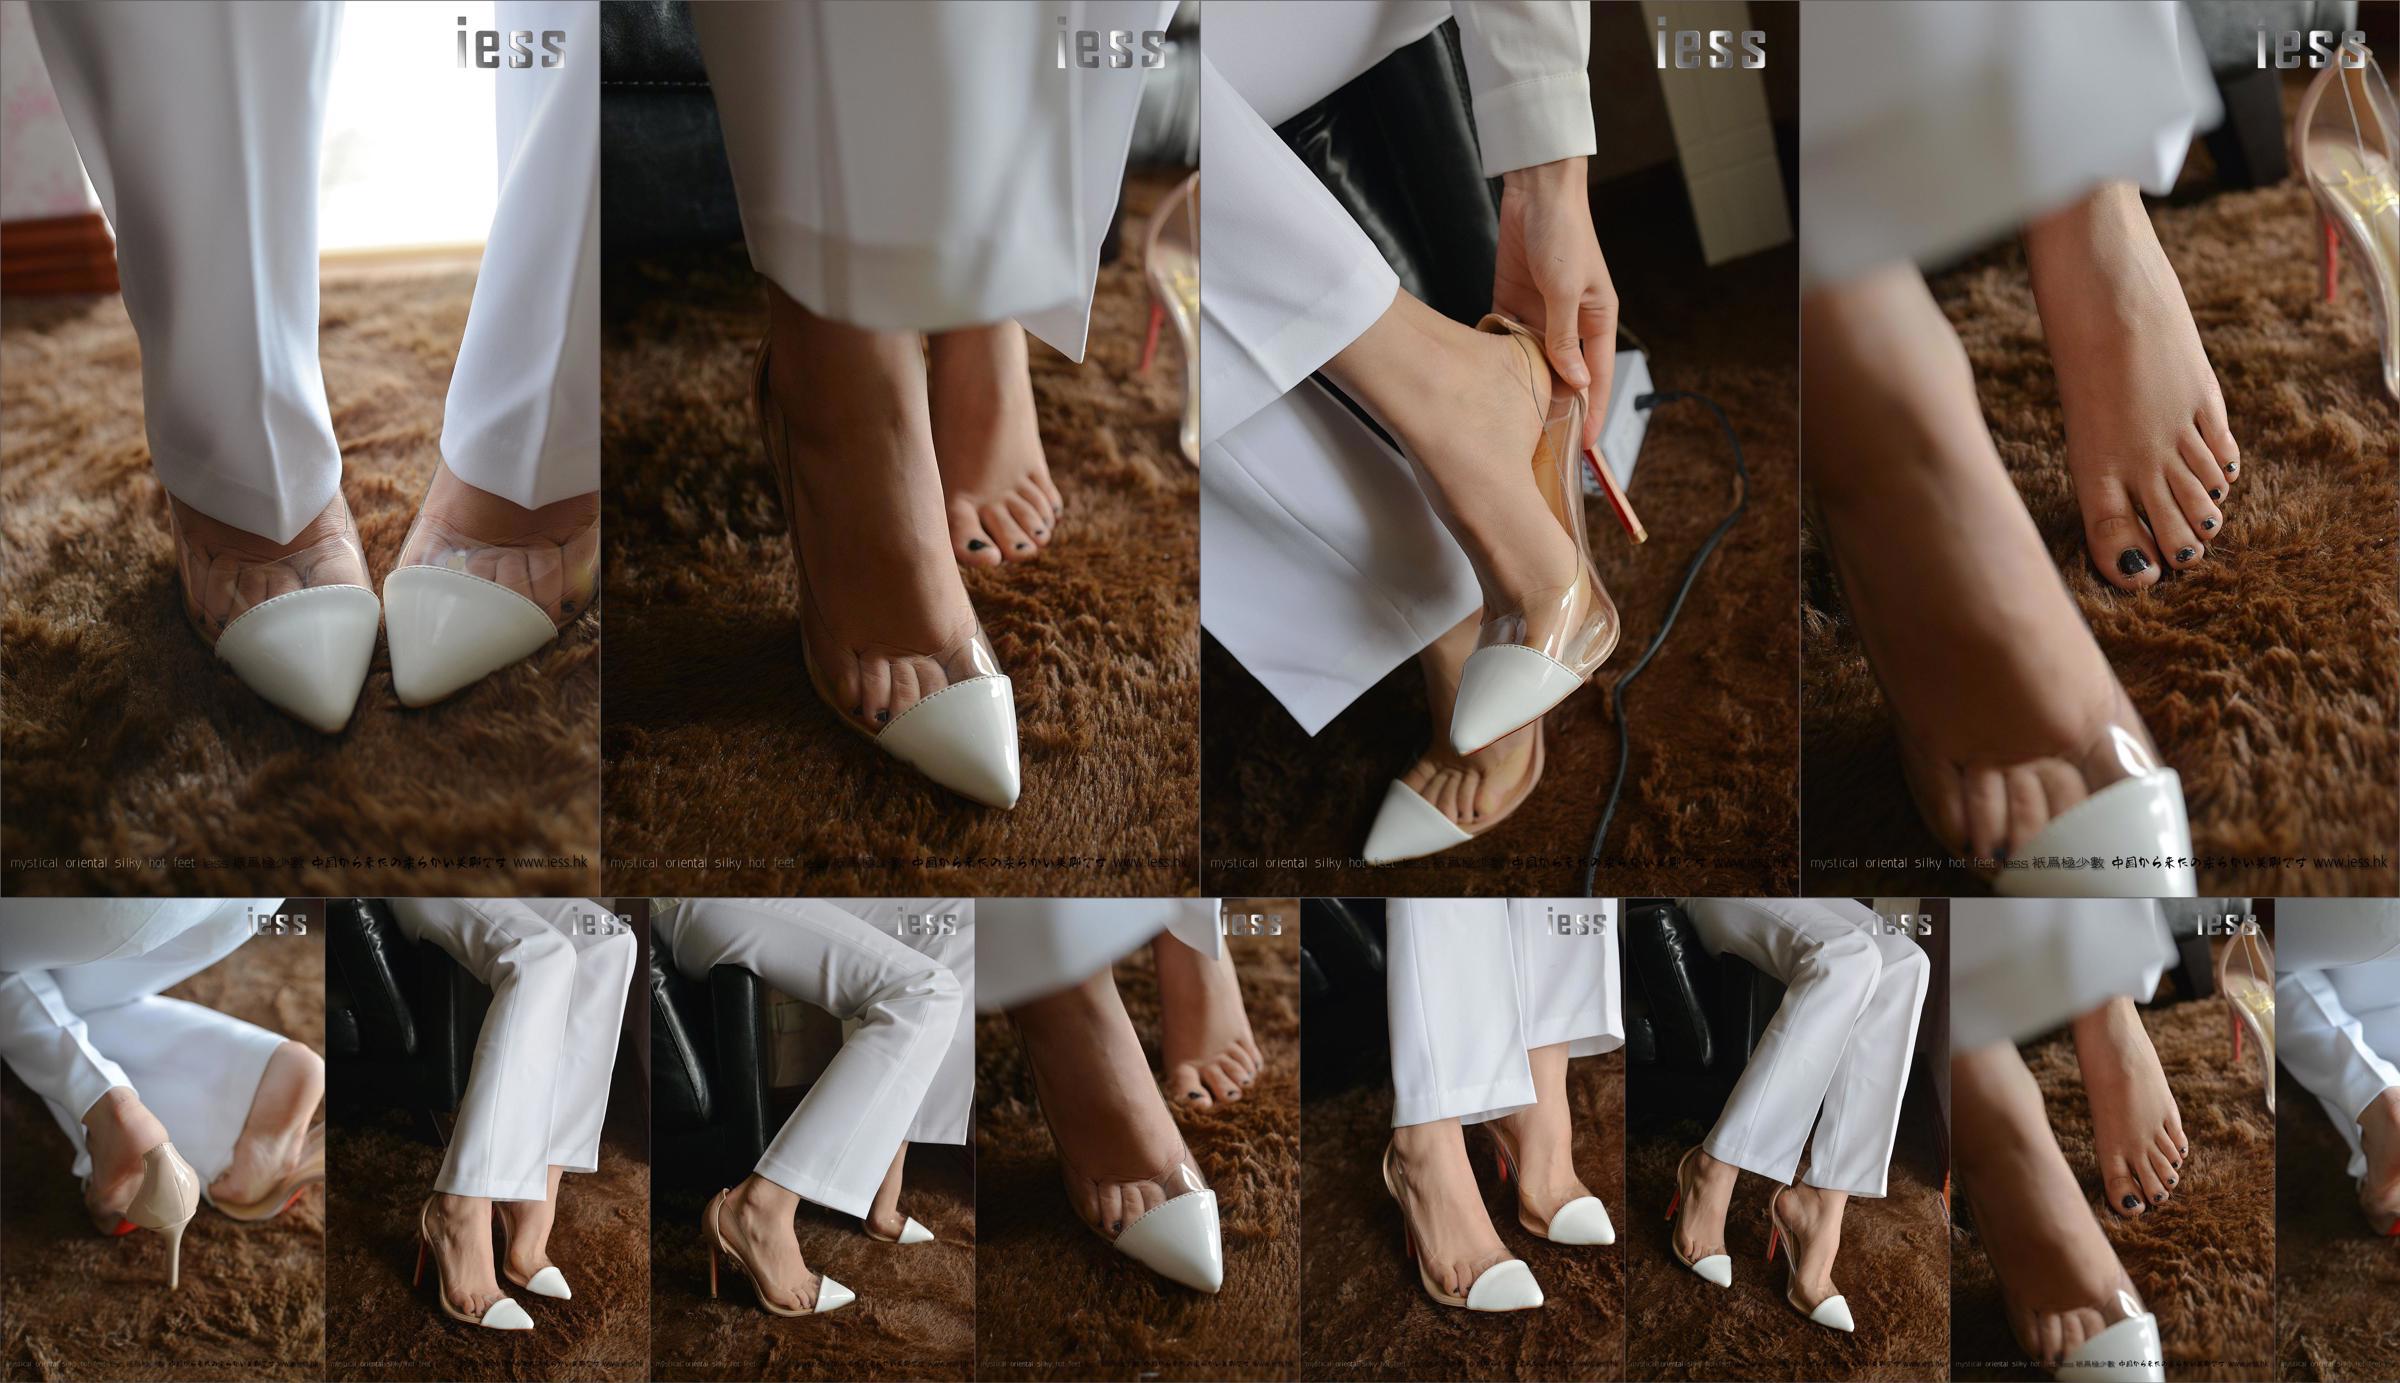 Silky Foot Bento 058 Suspense "Collection-Bare Foot High Heels" [IESS Wei Si Fun Xiang] No.d69577 Pagina 2